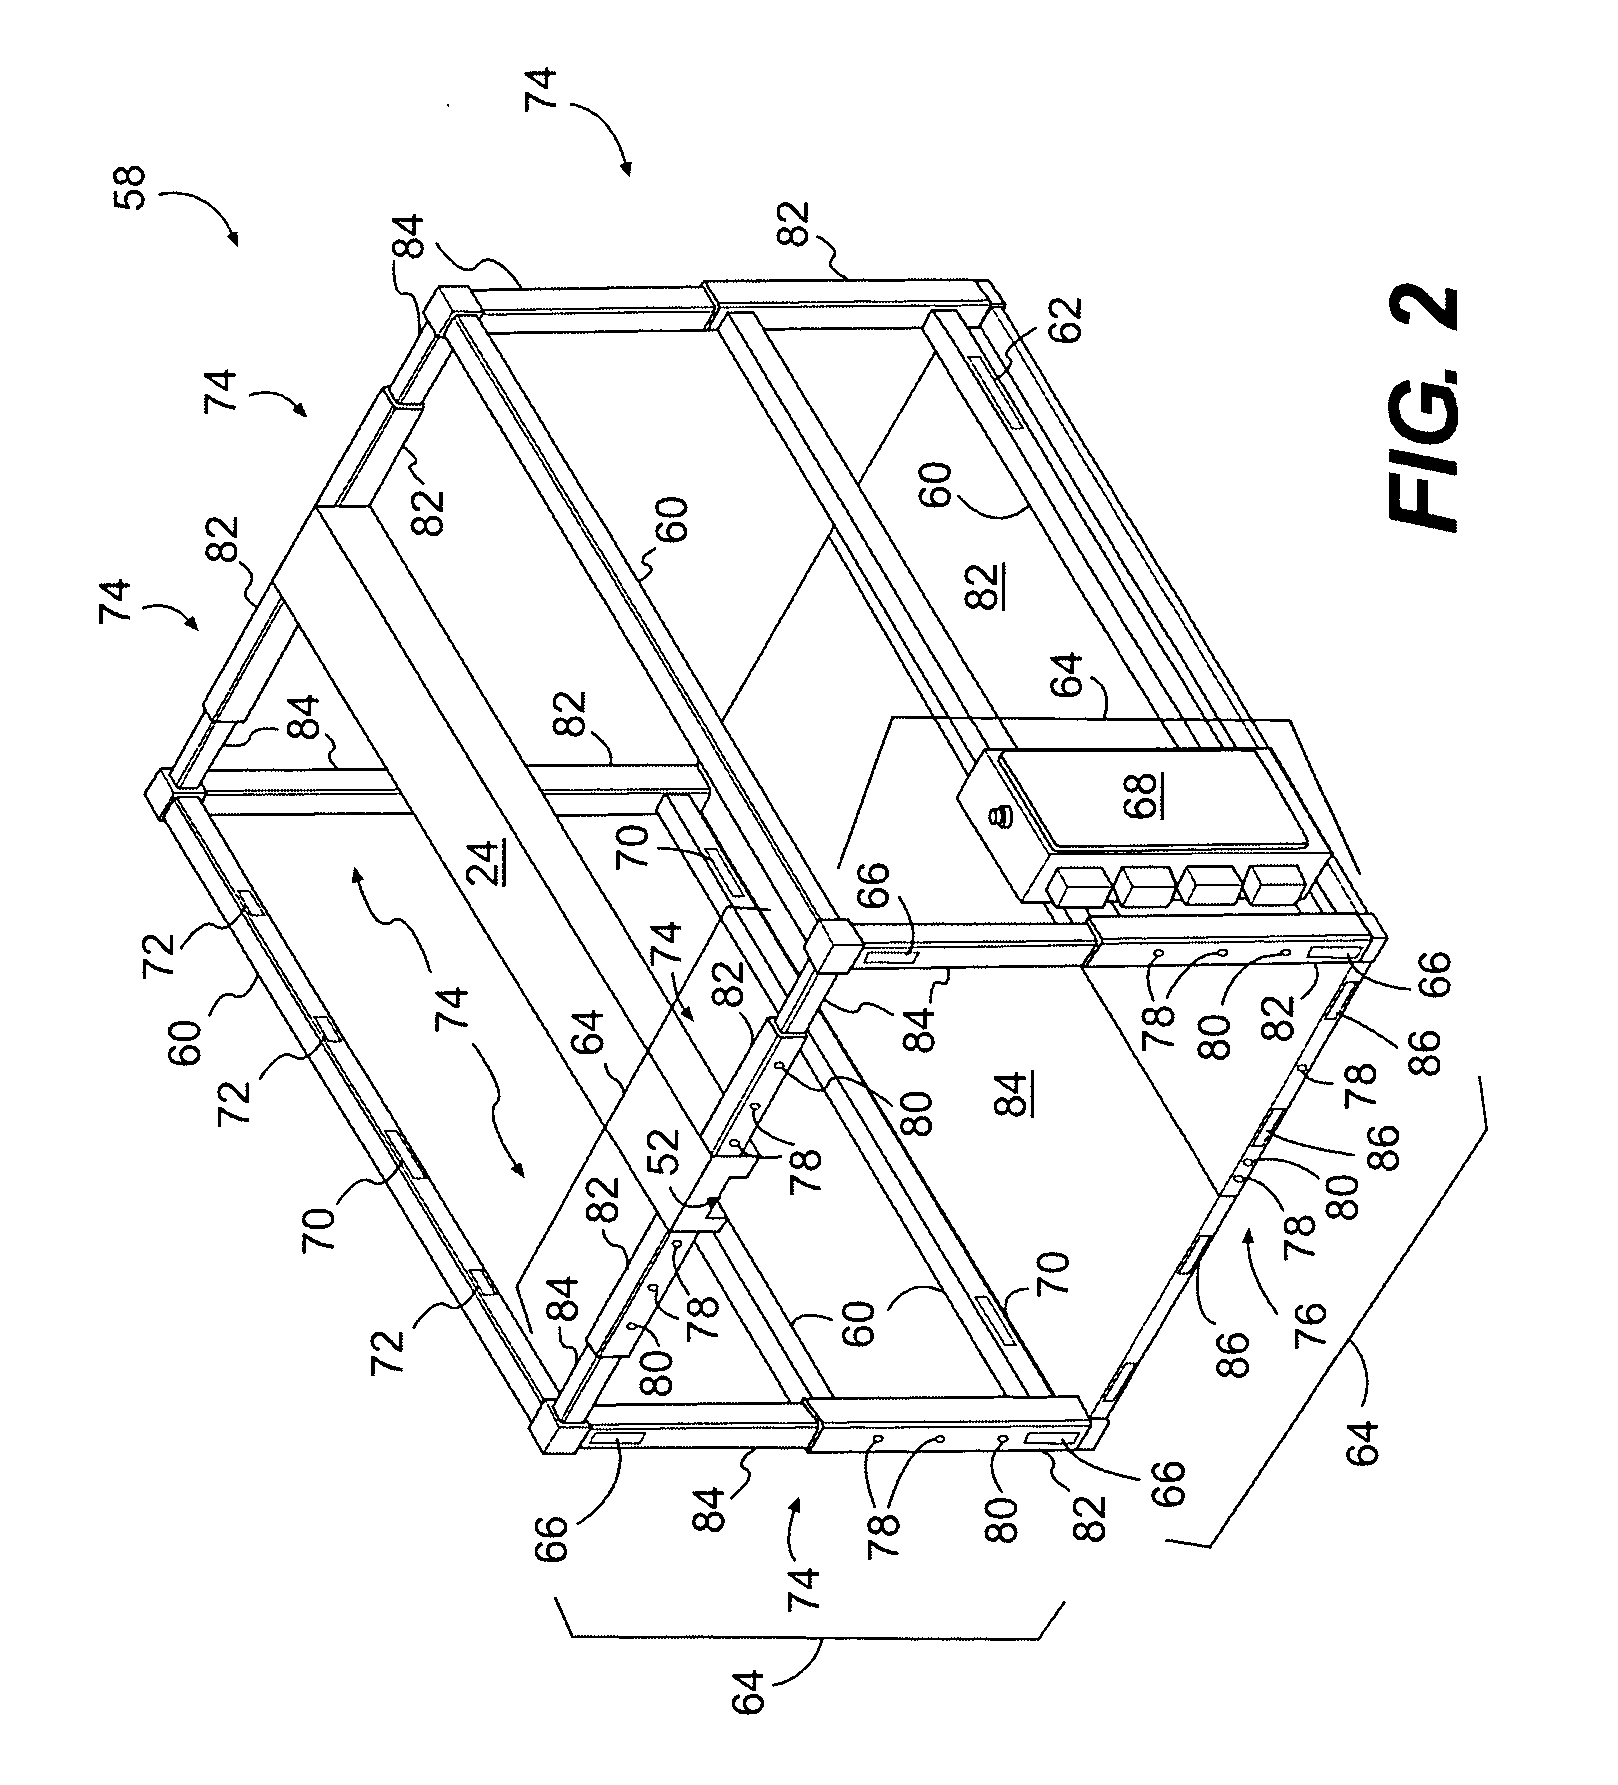 Portable modular manufacturing system